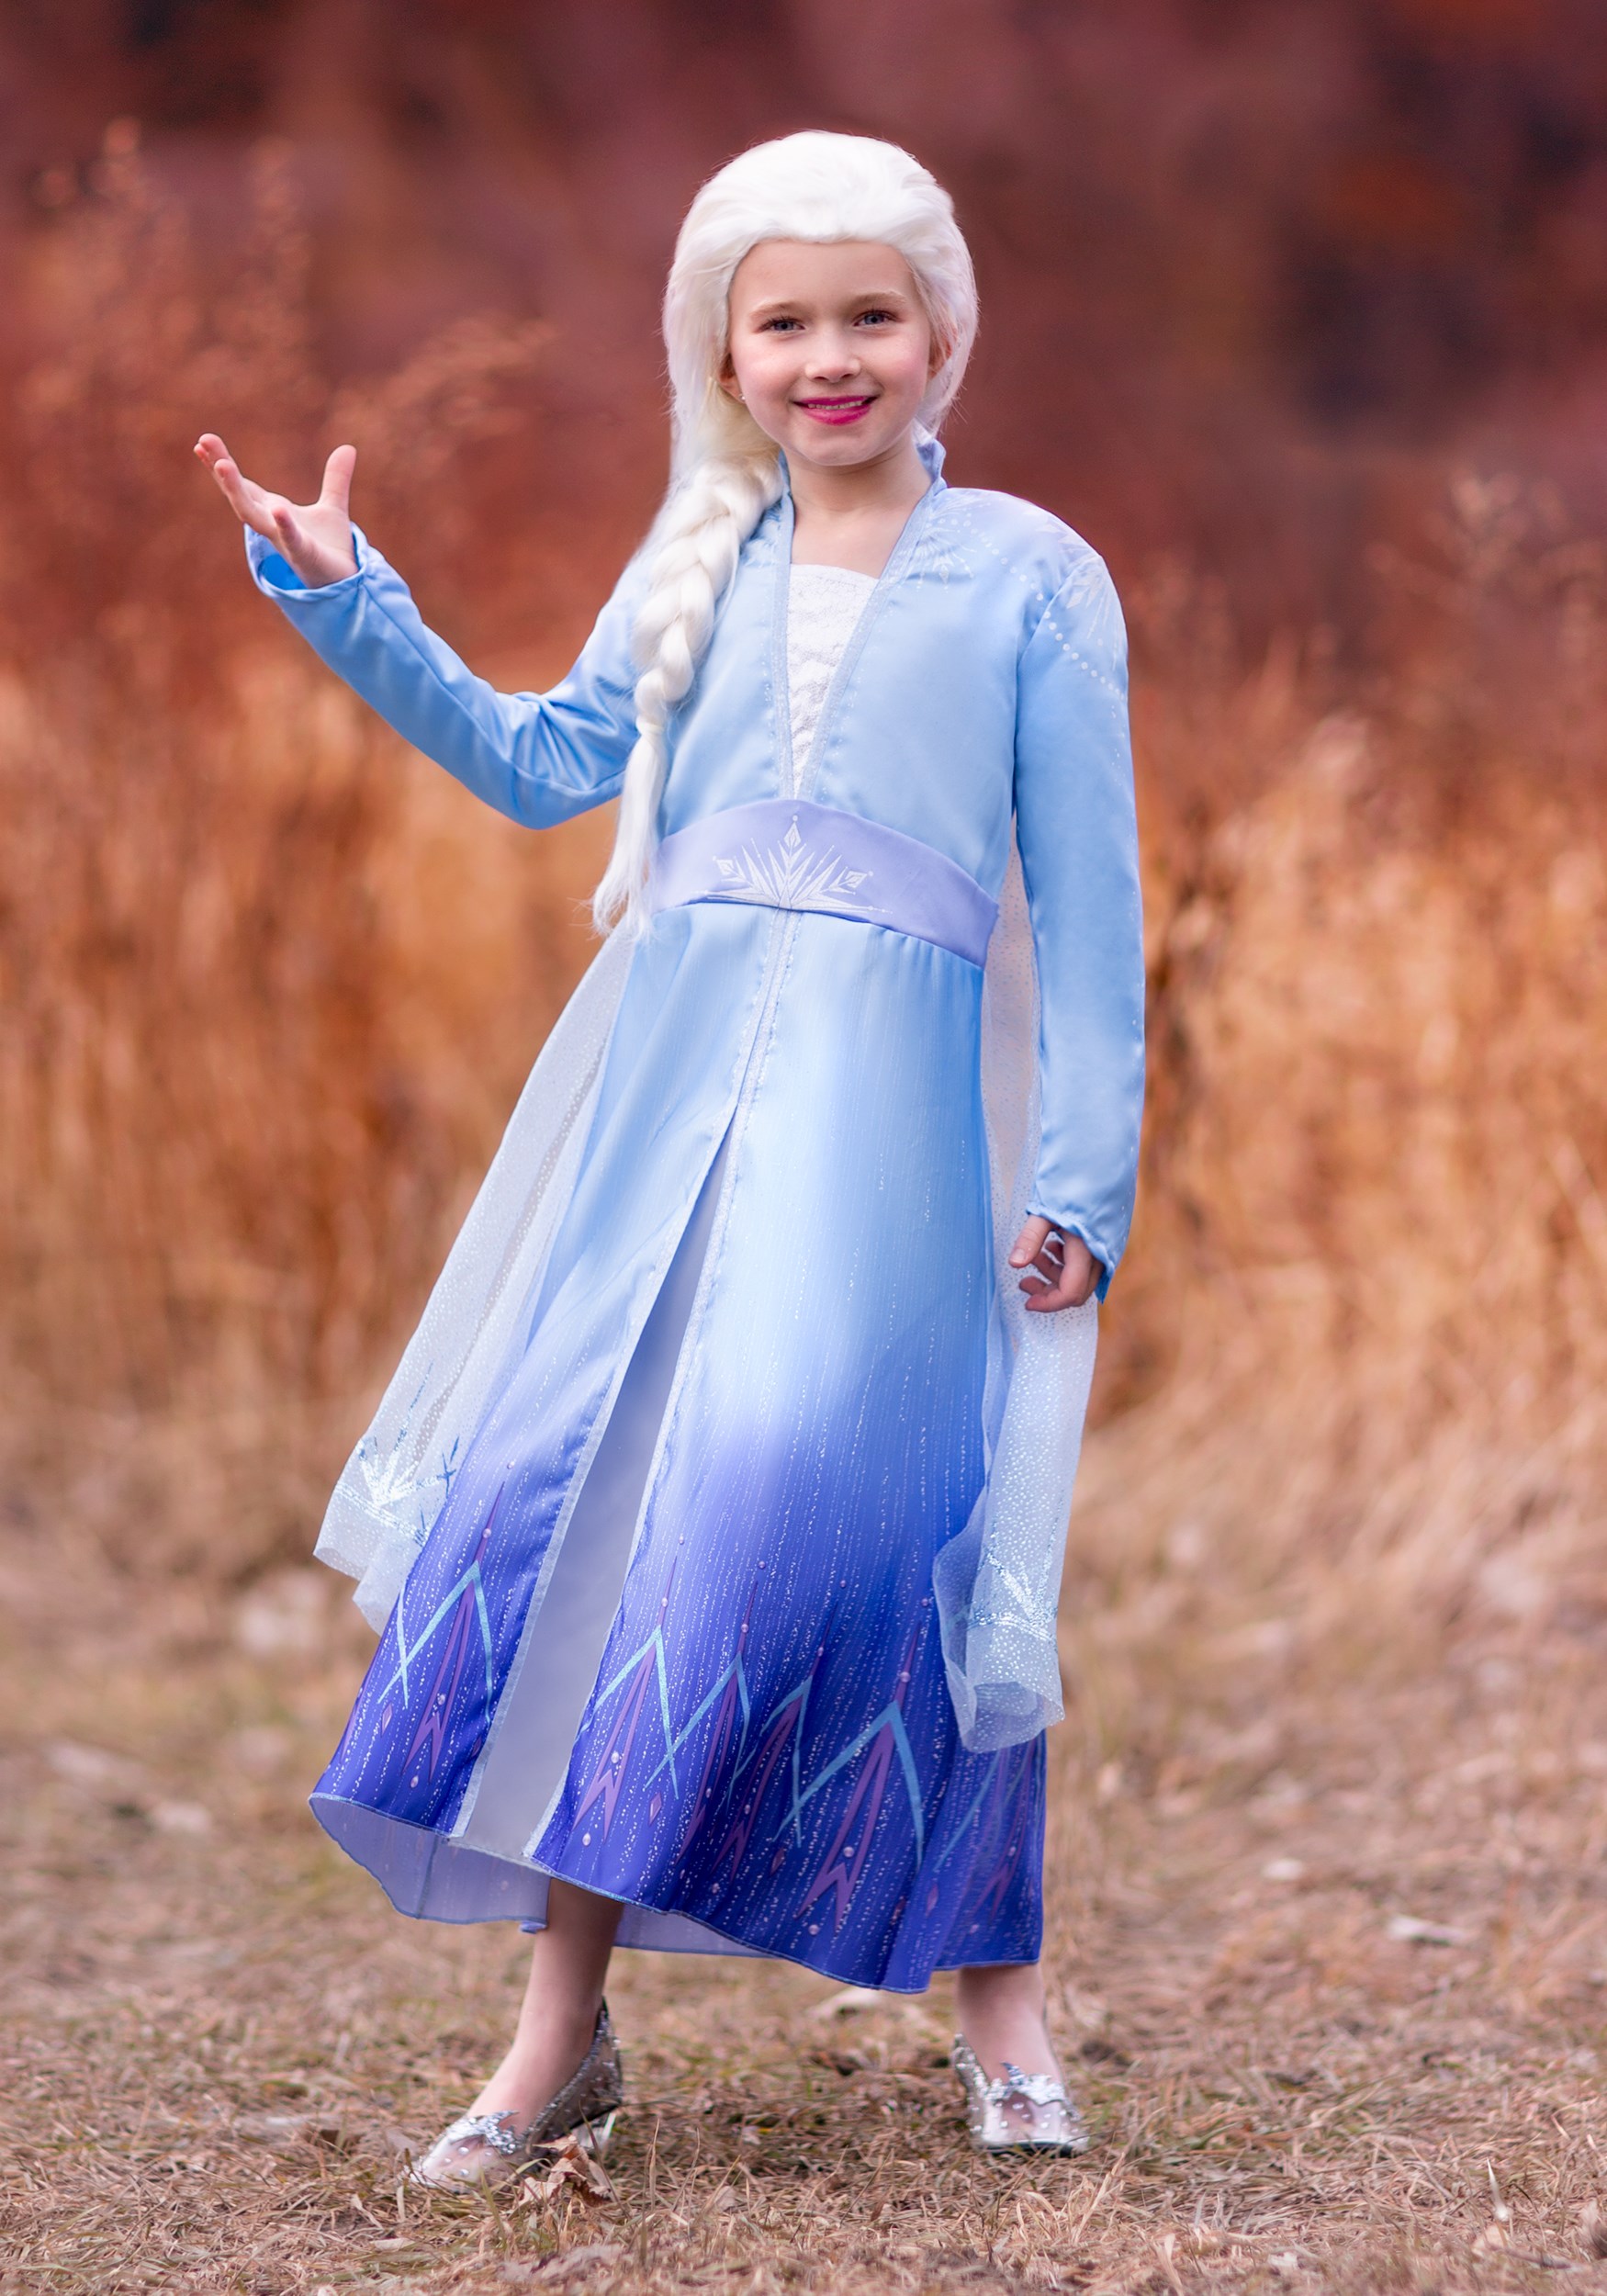 Kids Elsa Disney Frozen Classic Costume